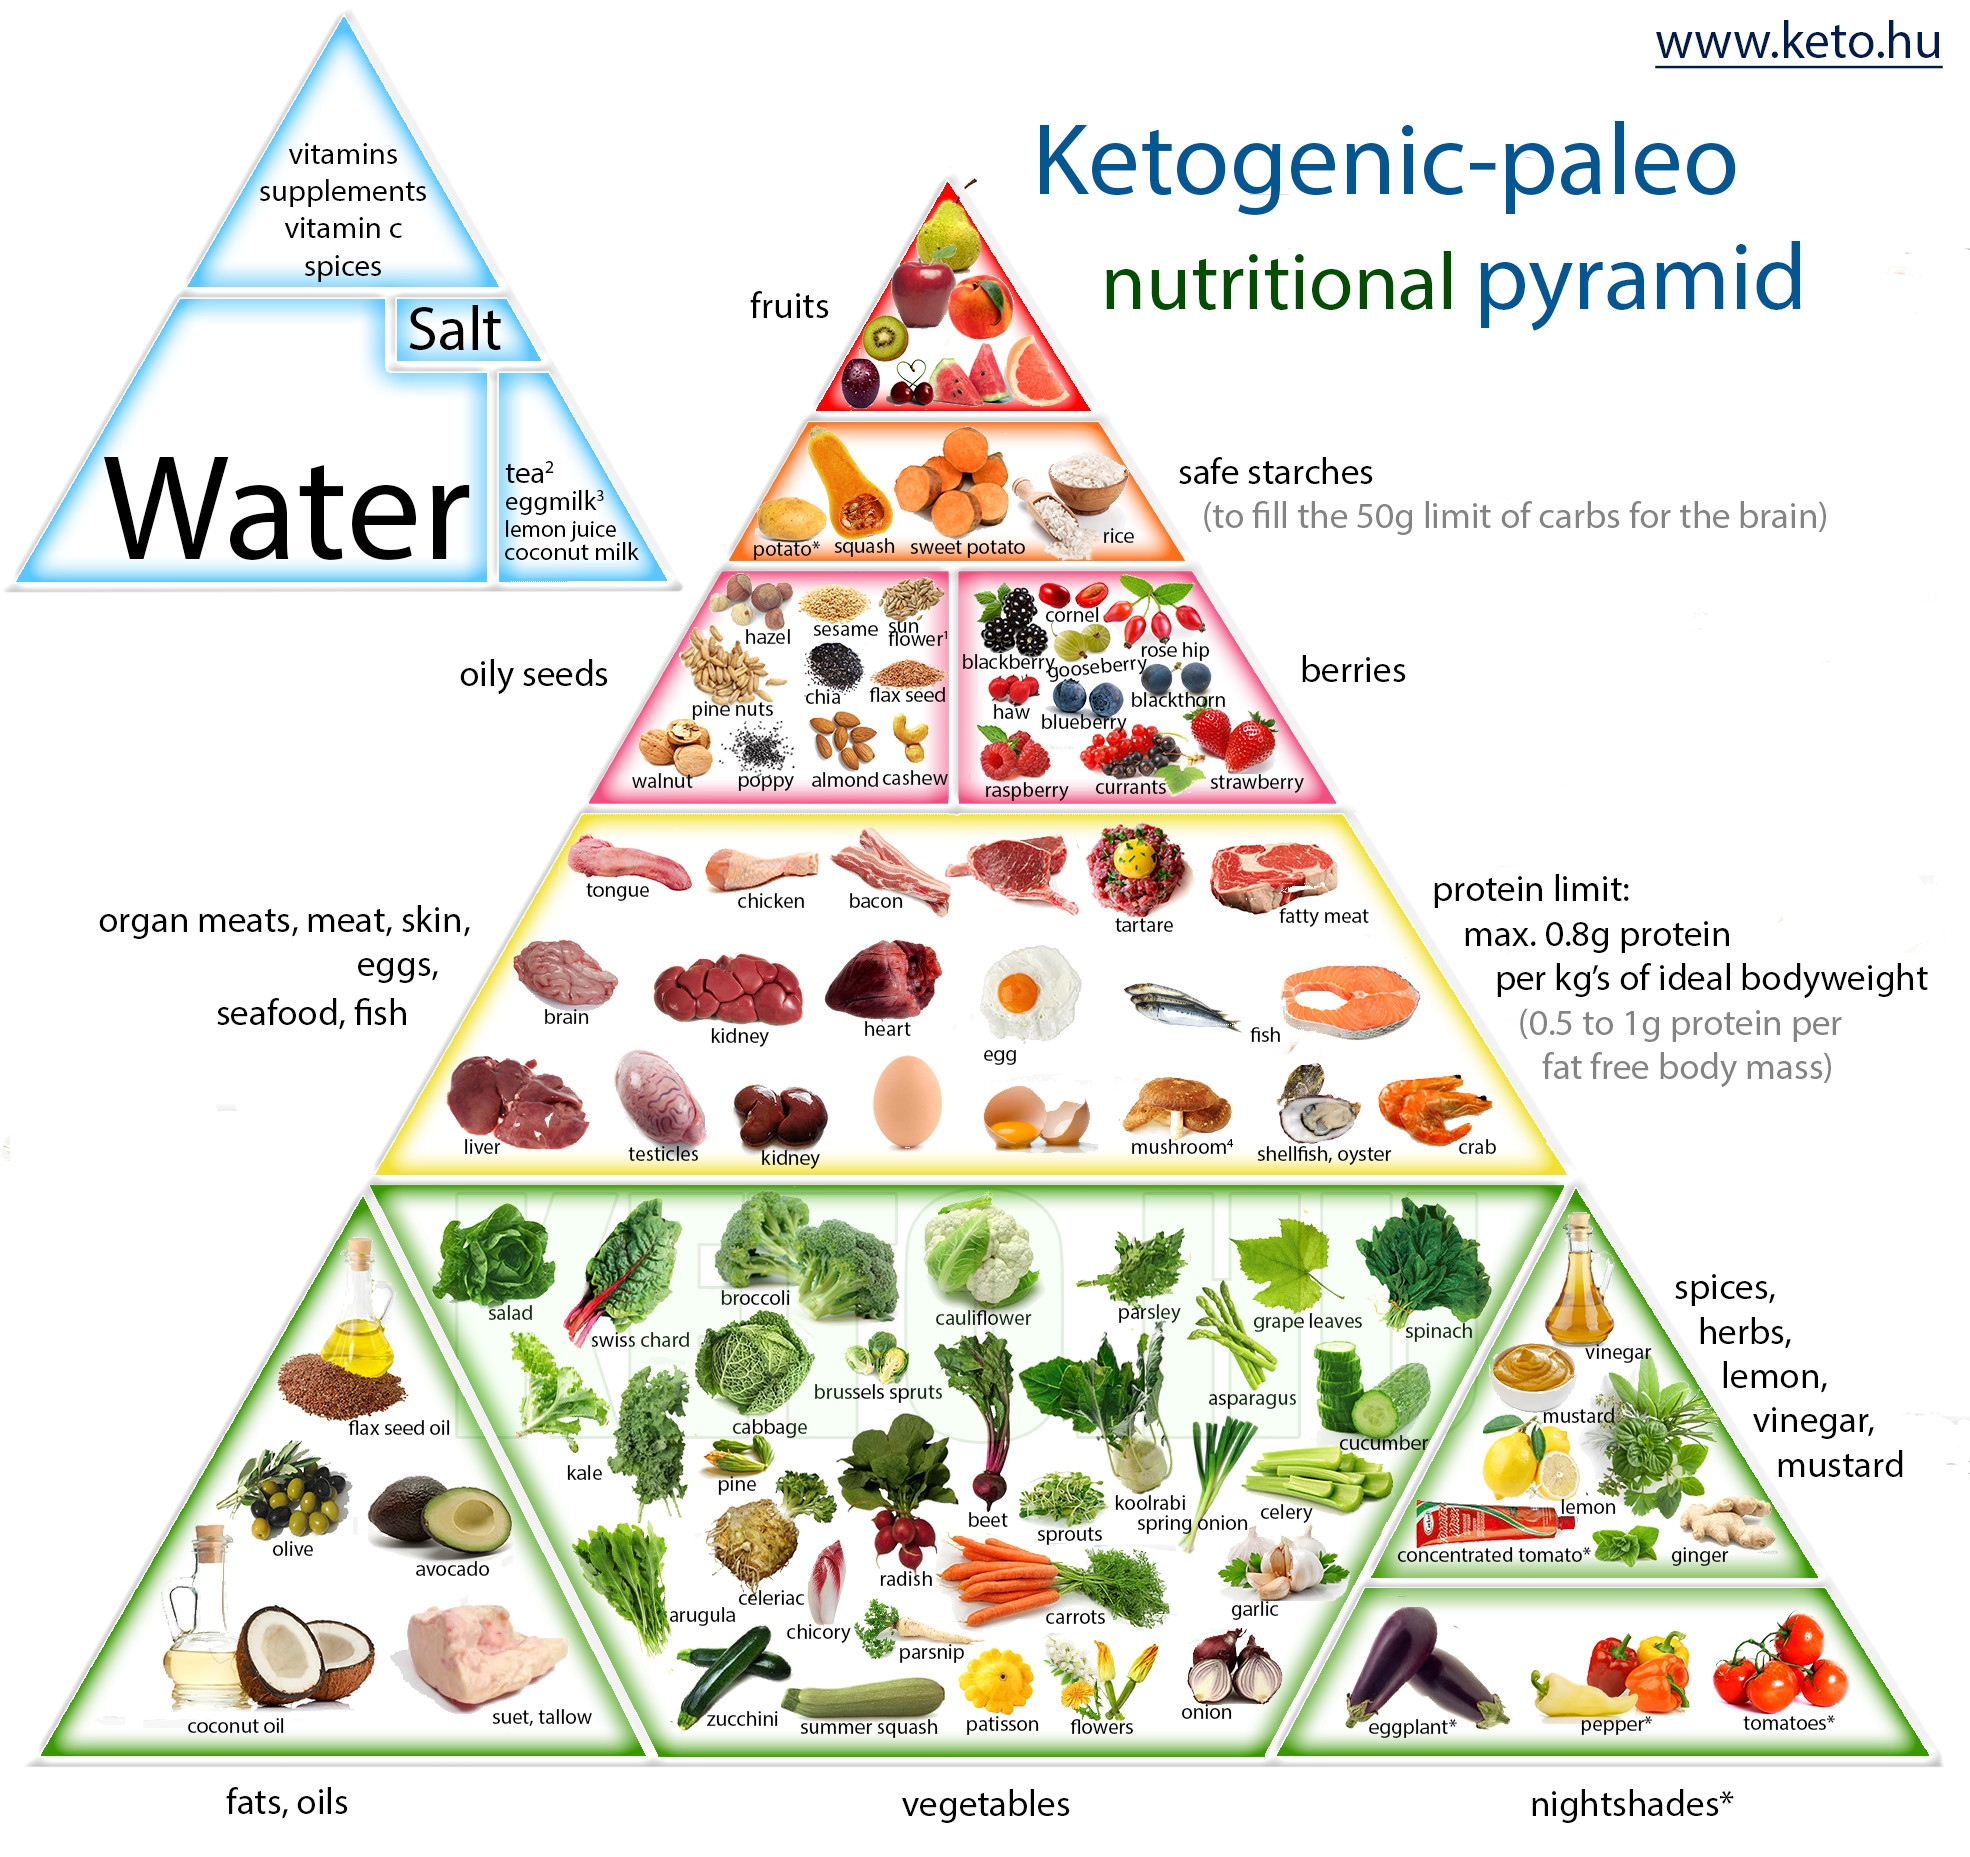 Keto Diet Food Pyramid
 ketogenic paleo nutrition pyramid